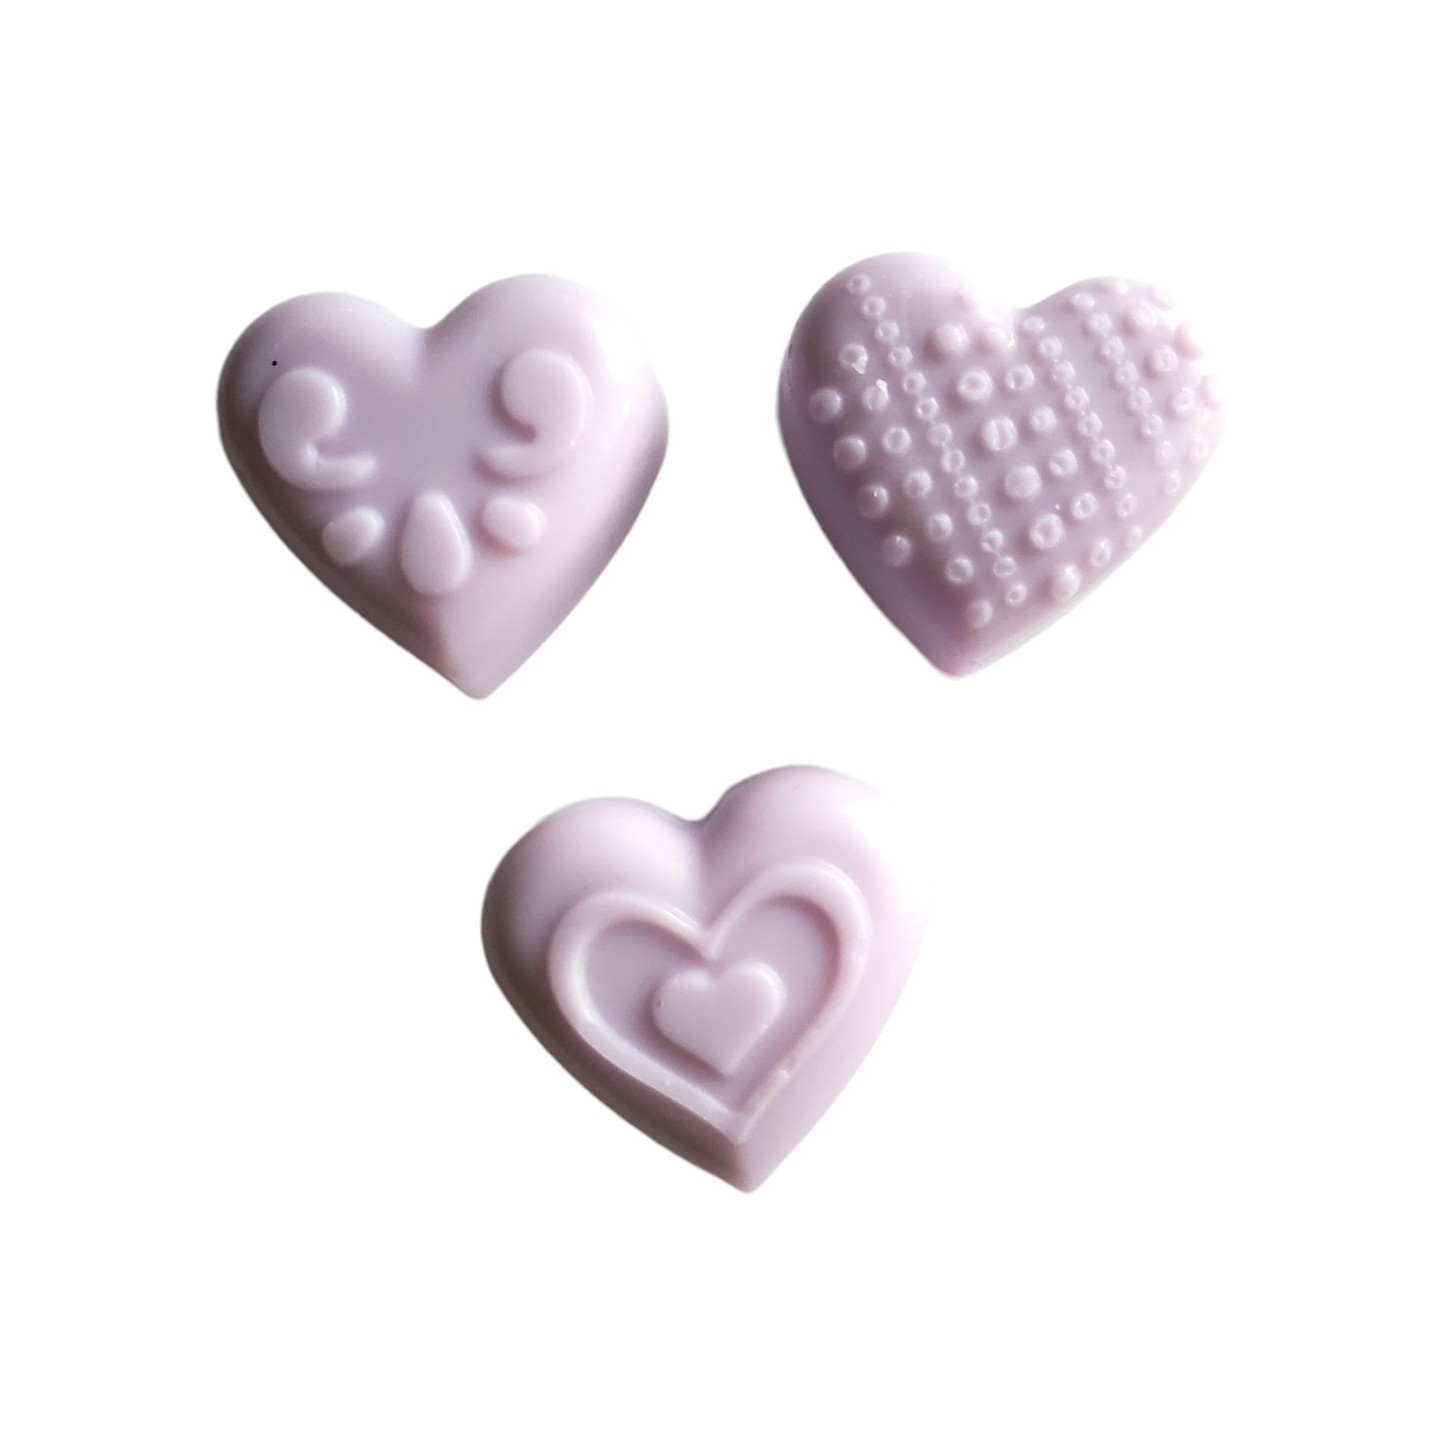 Three purple elegant heart soy wax melts